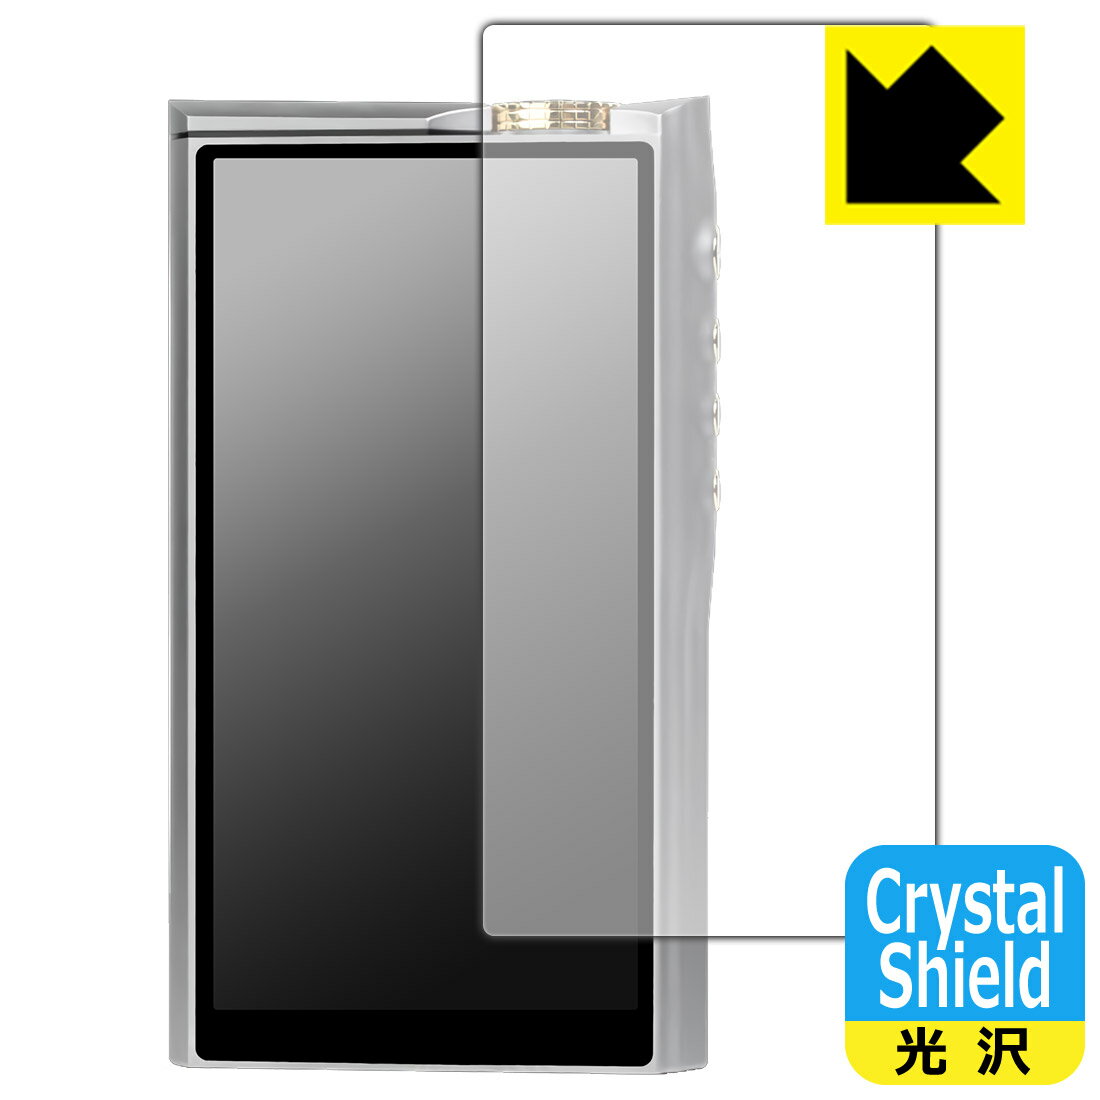 Crystal Shield【光沢】保護フィルム Cayin N30LE (表面用) 3枚セット 日本製 自社製造直販